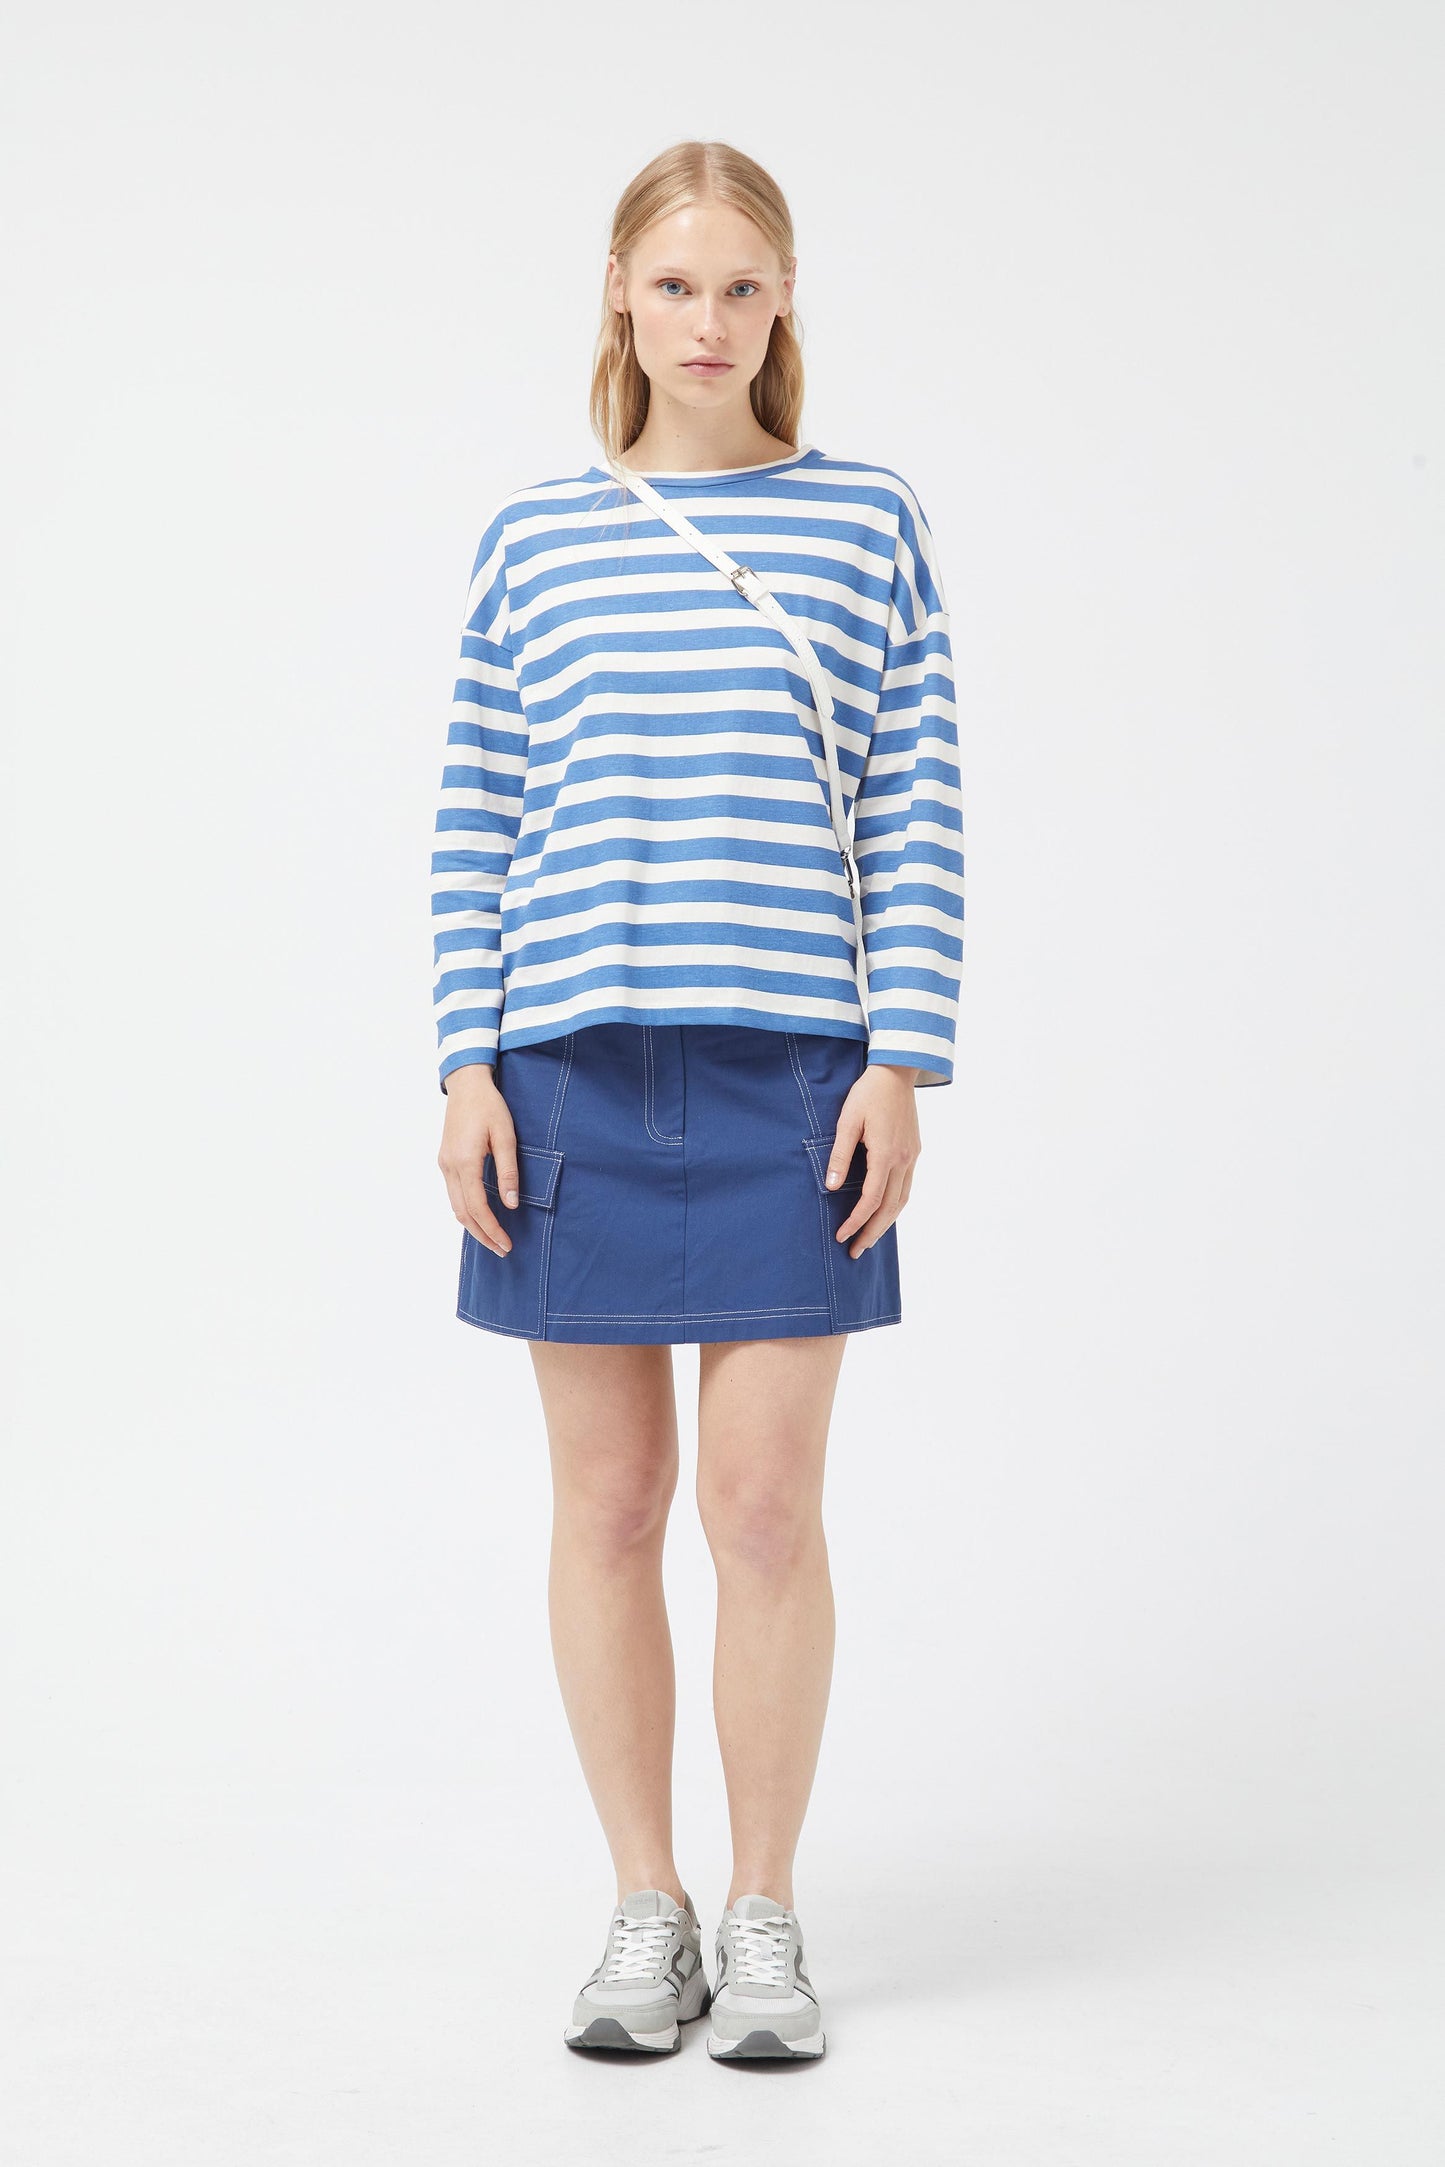 Blue Striped Long Sleeve T-shirt